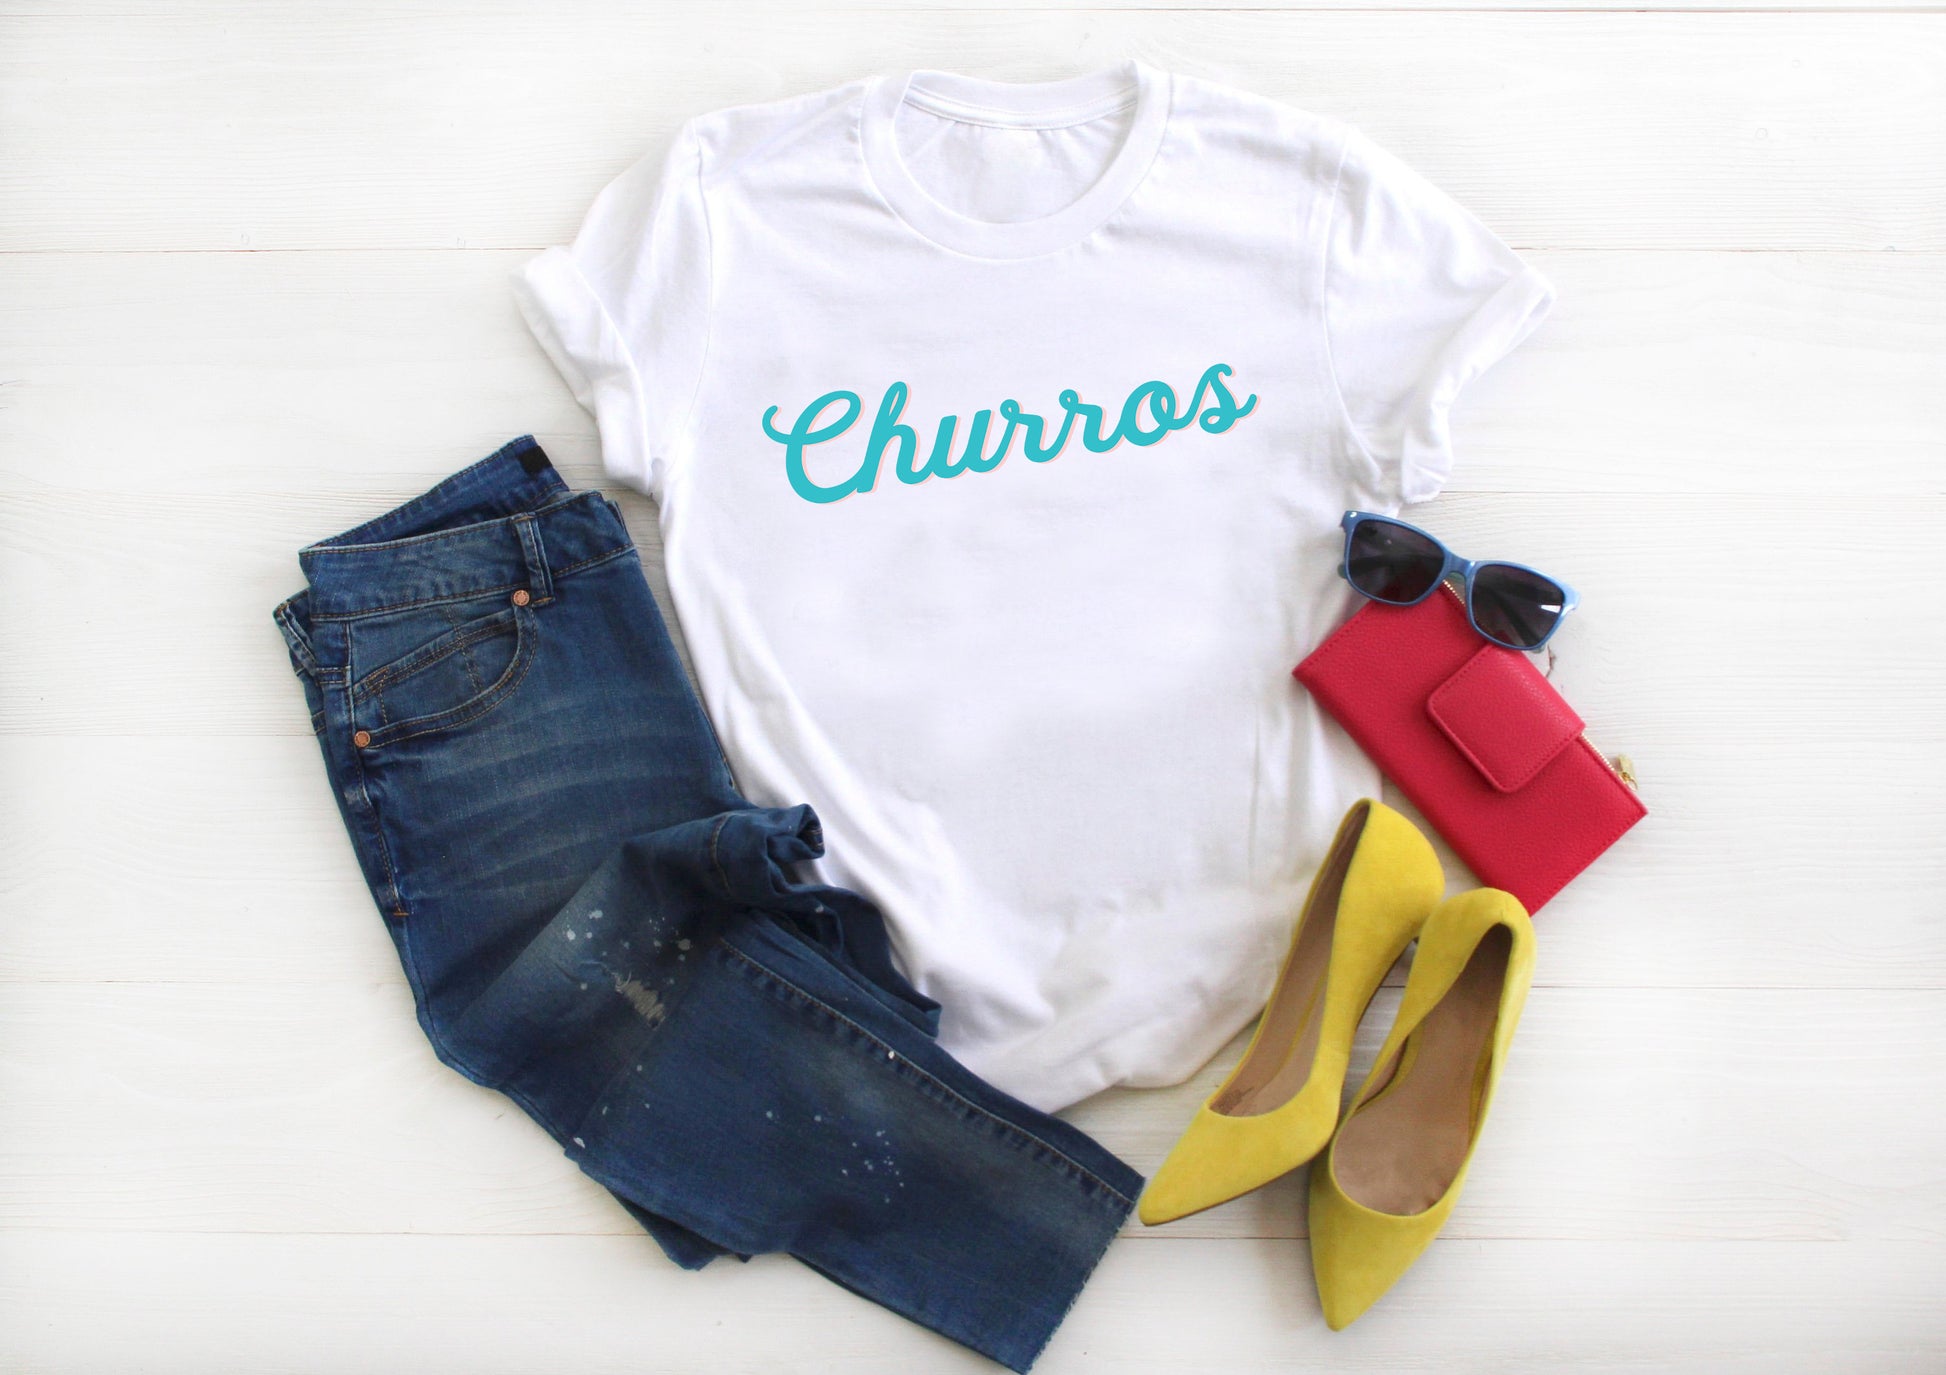 Churros Short-Sleeve Unisex T-Shirt | Disney Snacks Shirt - Next Stop Main Street